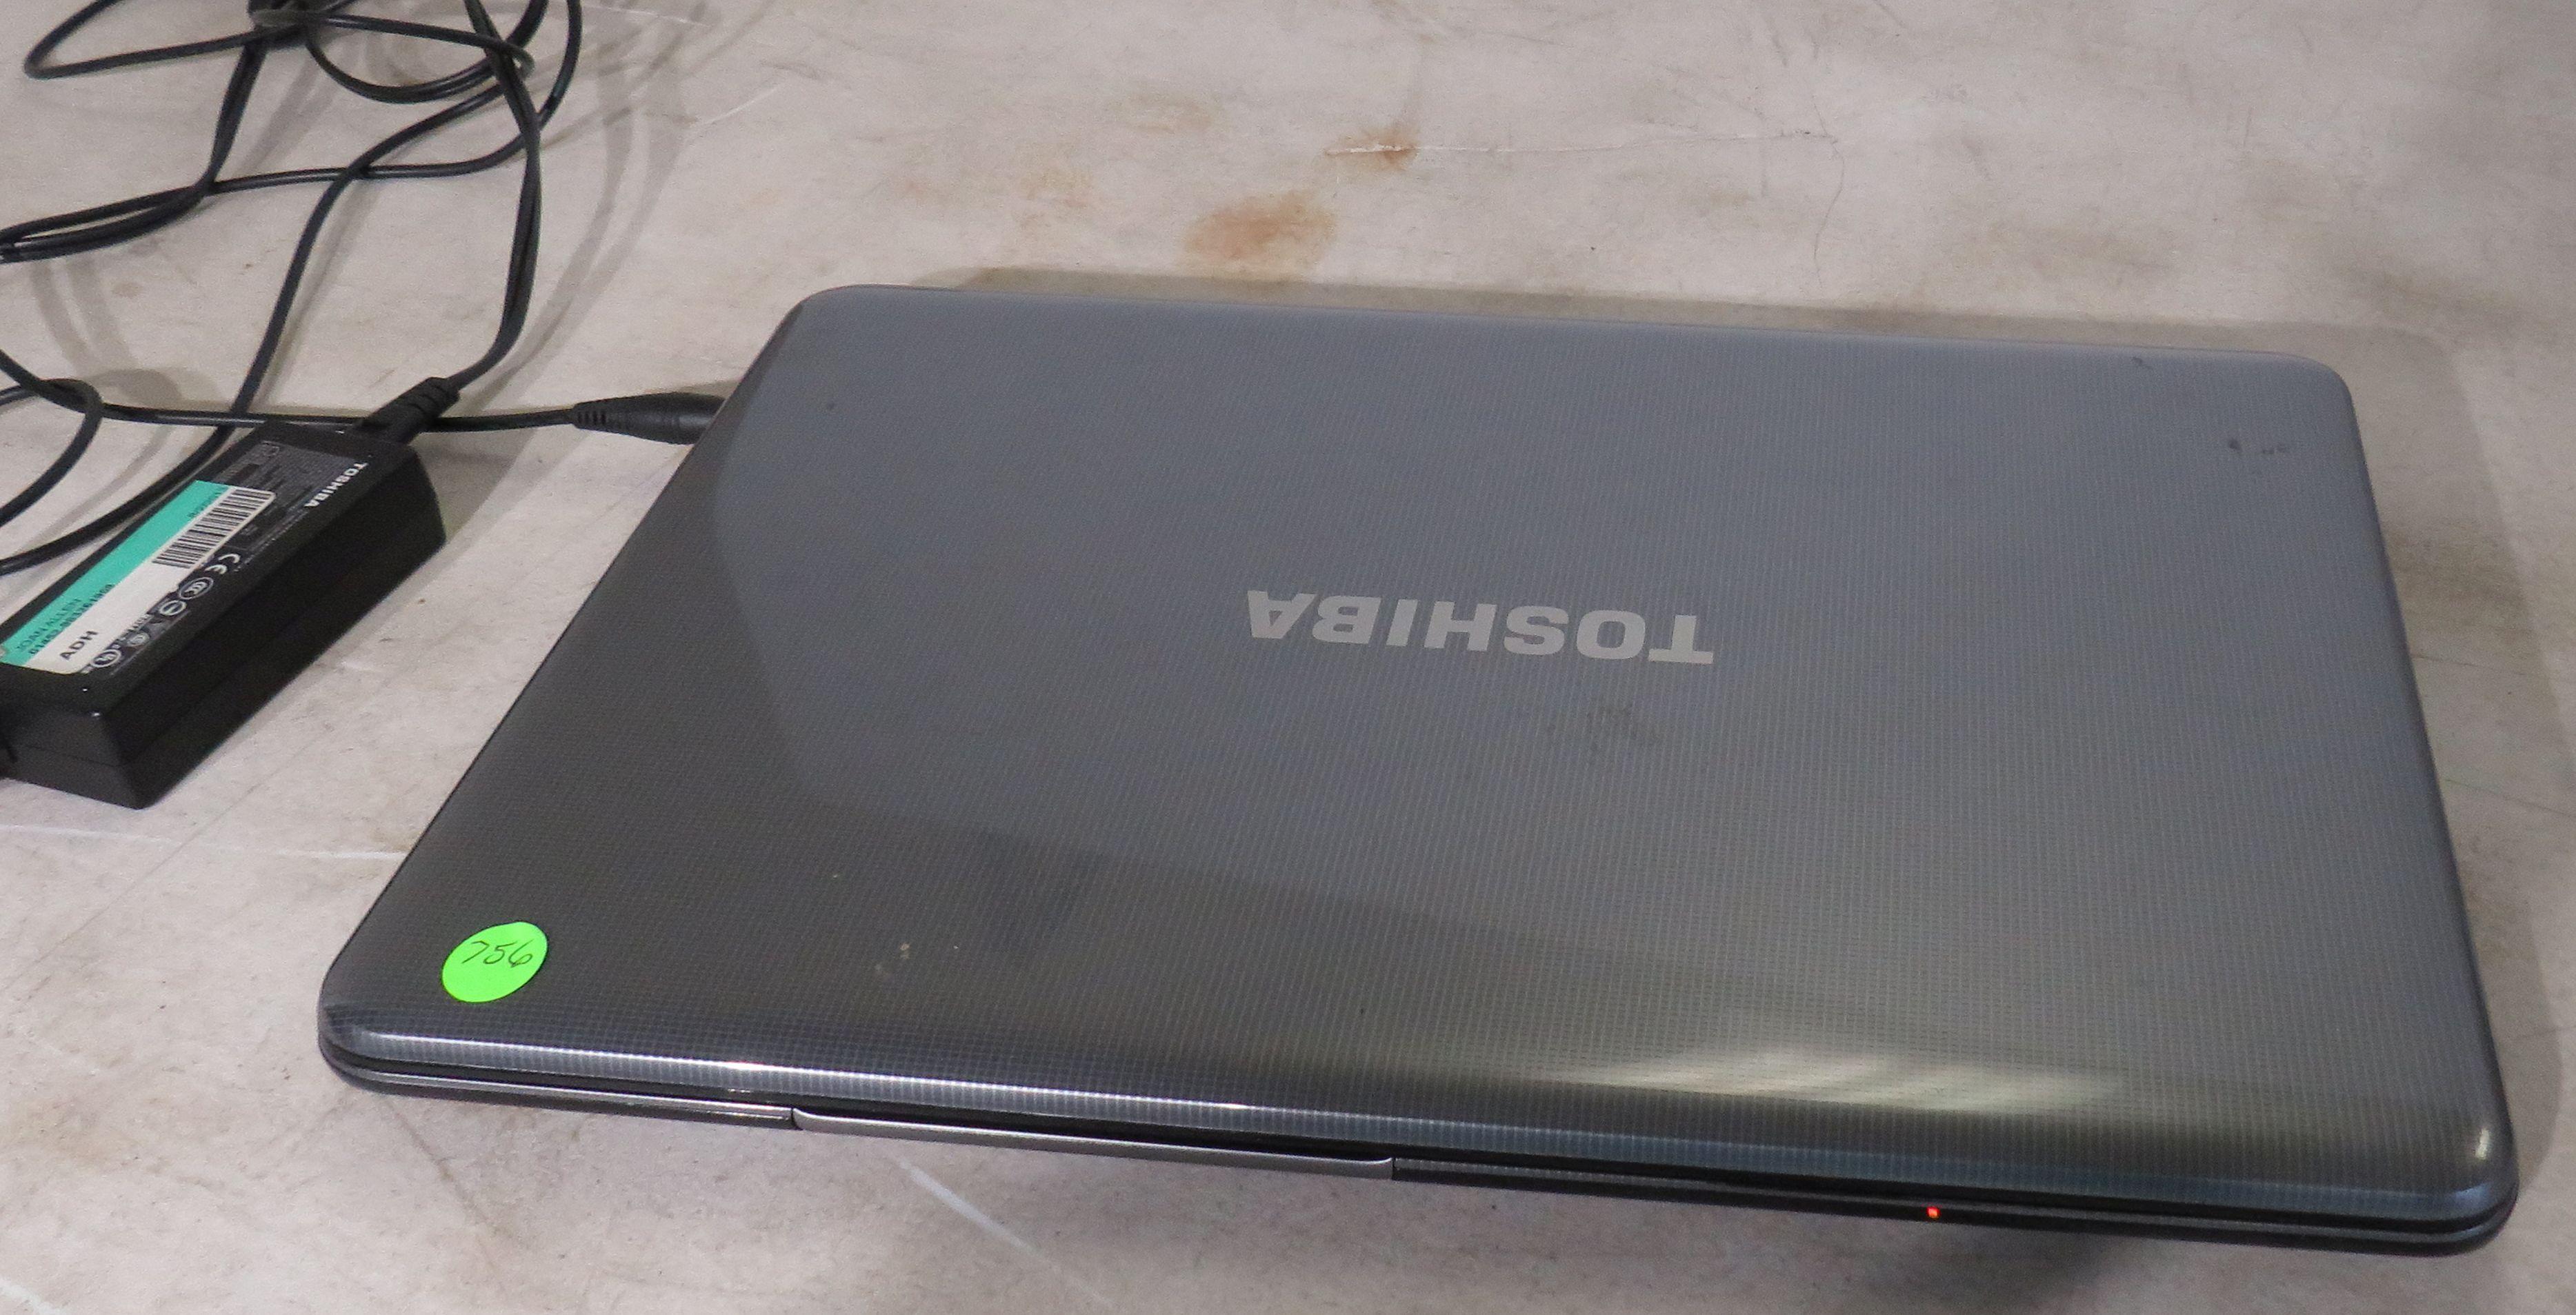 Toshiba Satellite L8750 Laptop with Windows 10.  AMD A6-4400M APJ processor, Radeon 2.70 ghz graphic